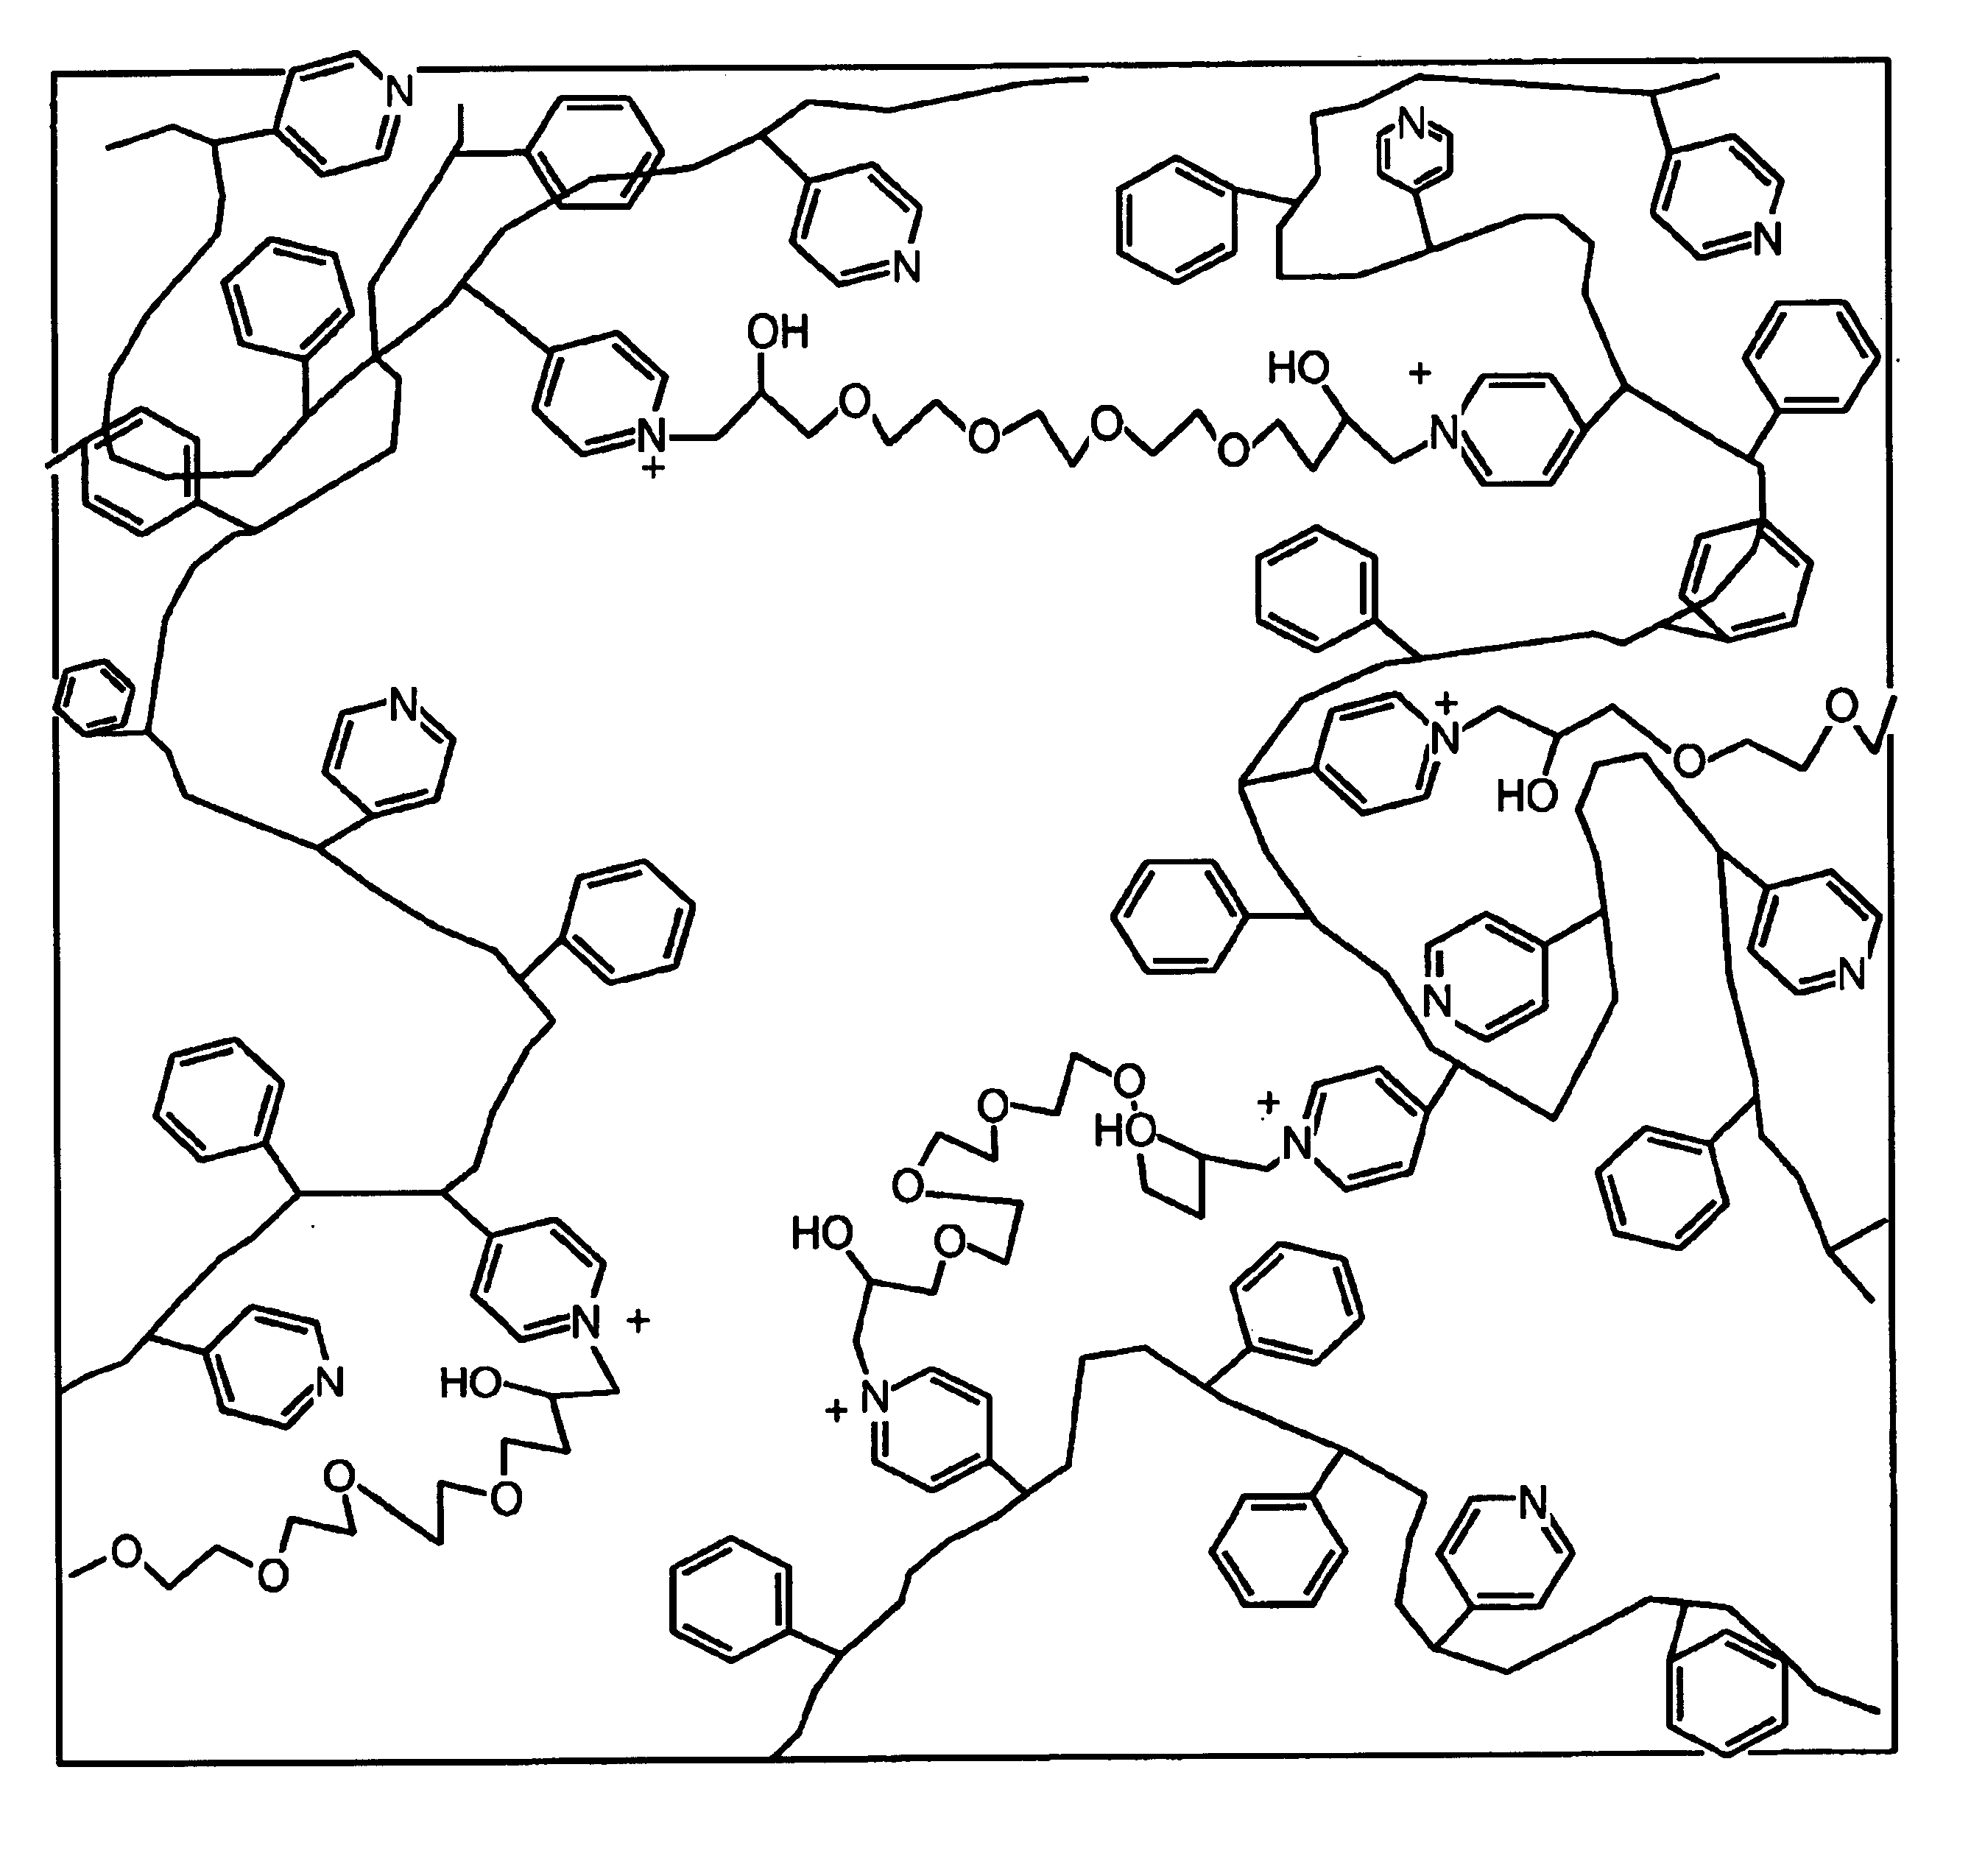 Biosensor membranes composed of polymers containing heterocyclic nitrogens